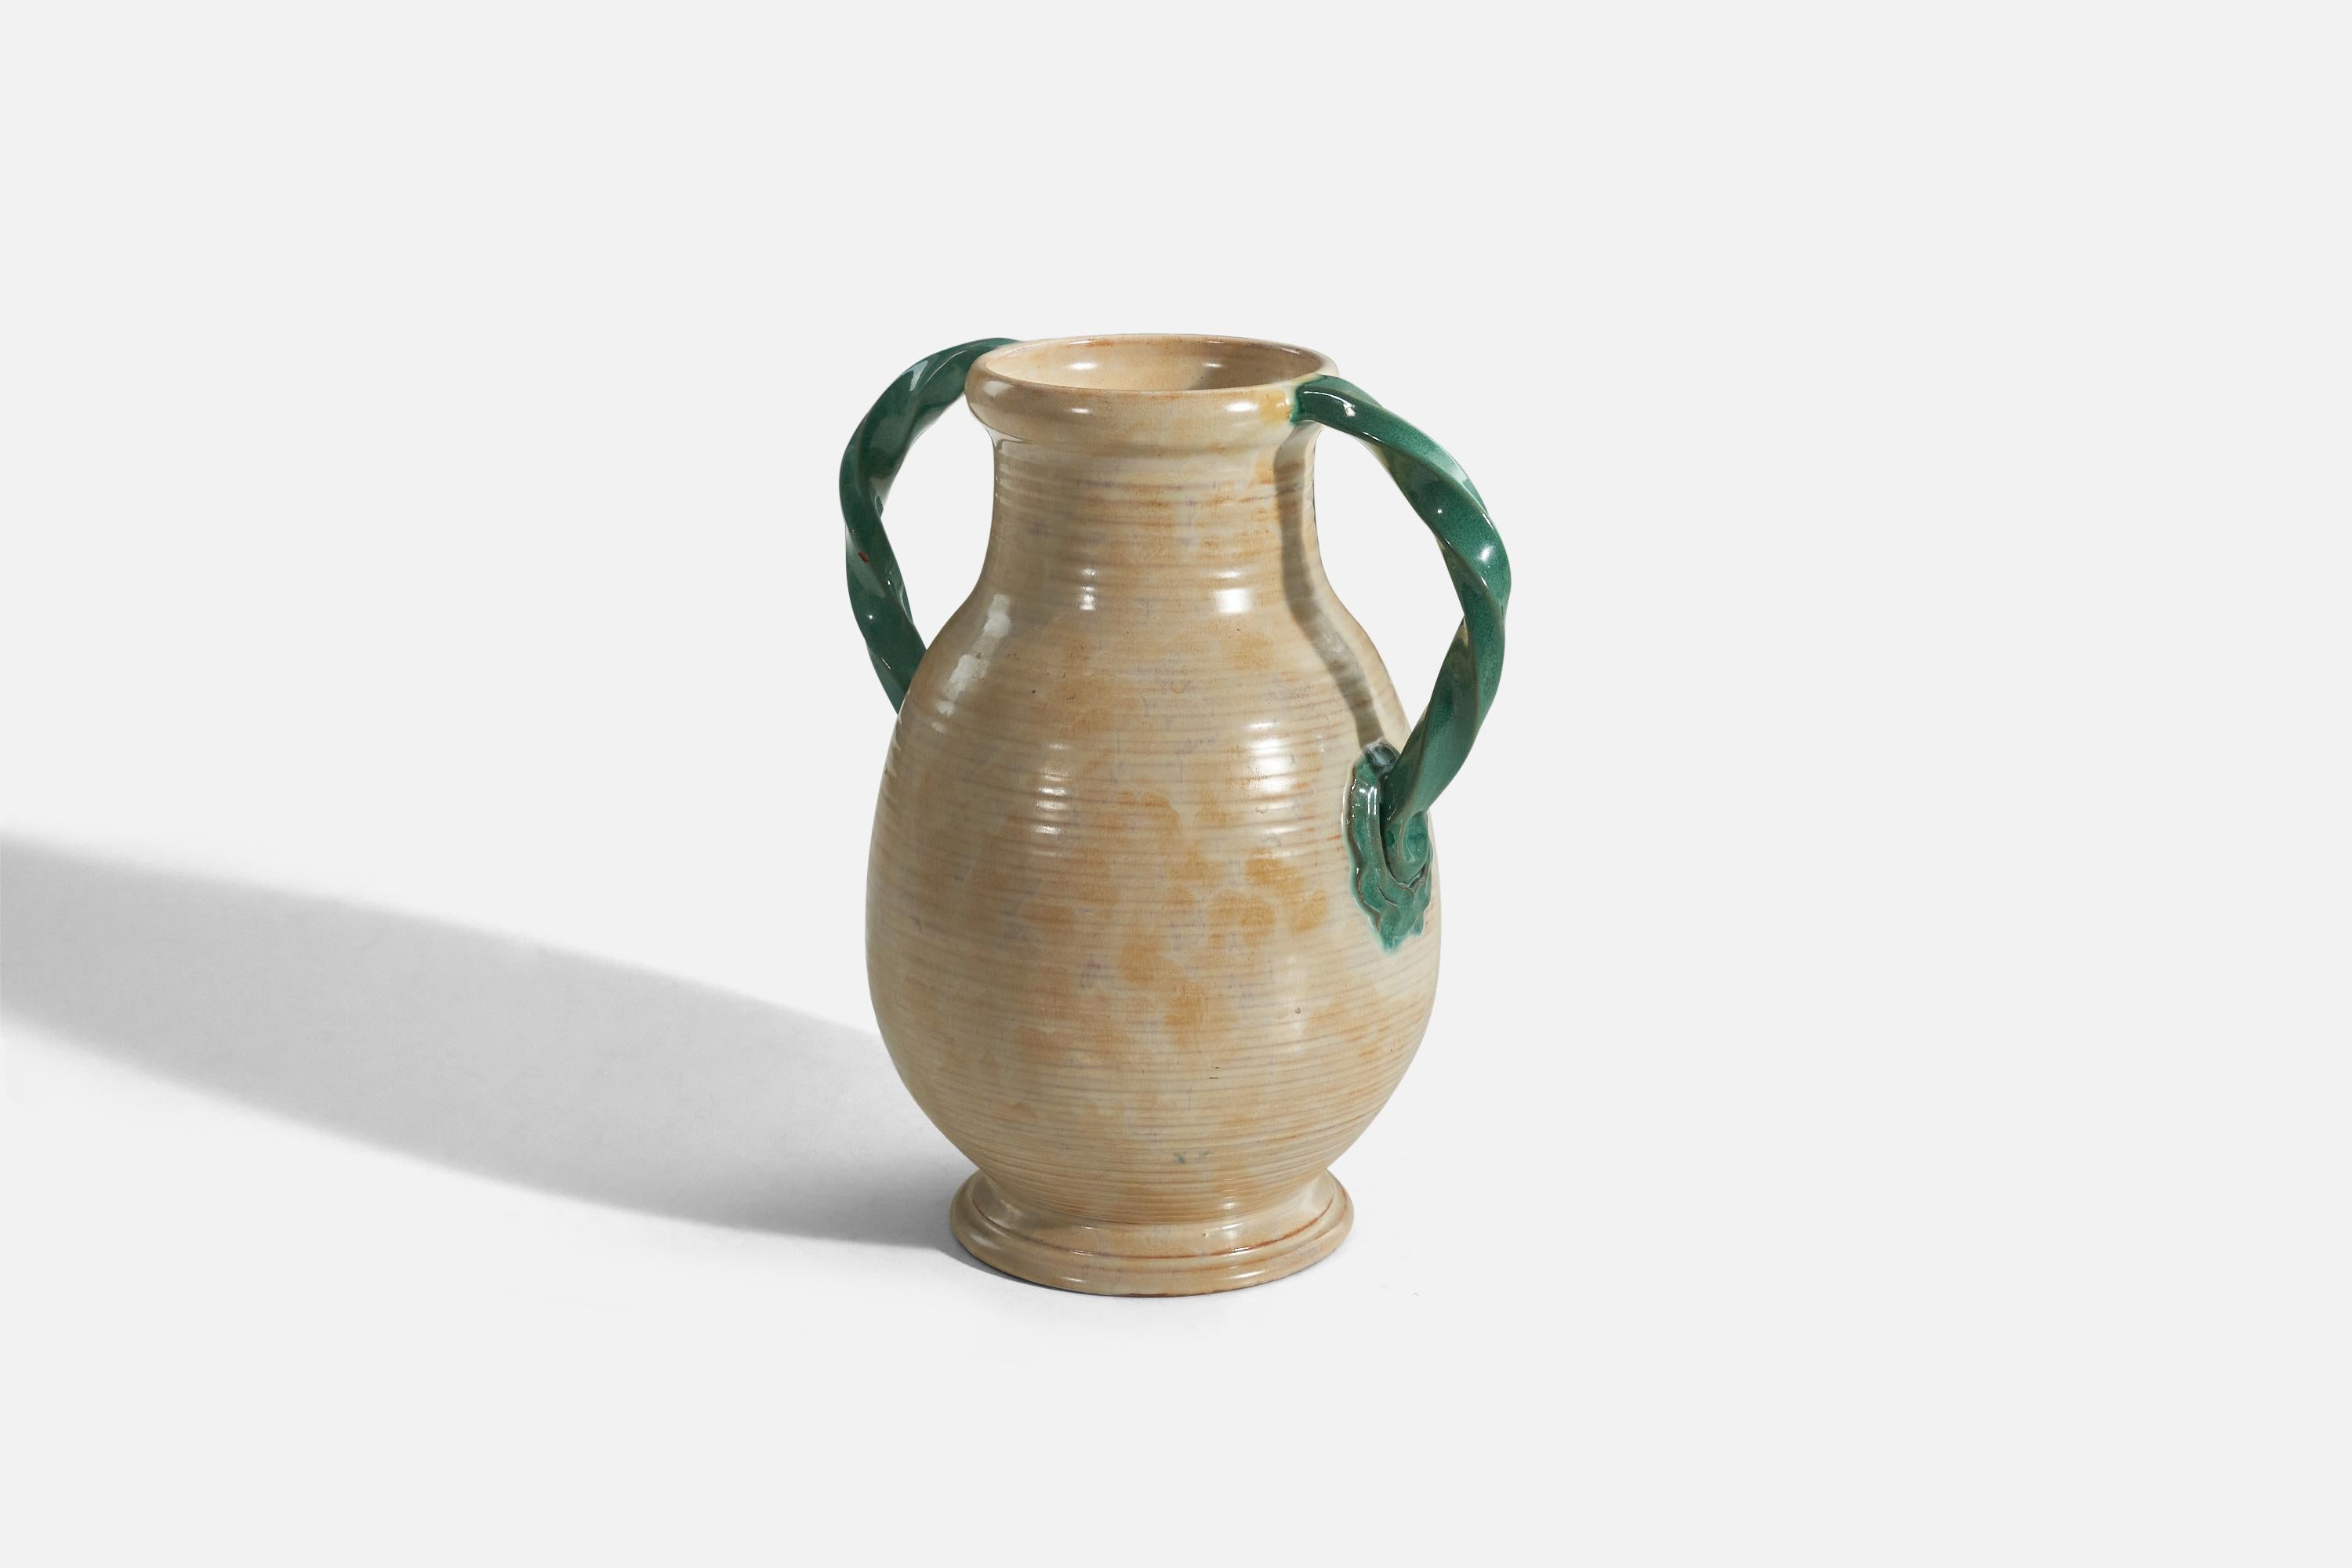 A beige and green glazed earthenware vase designed and produced by Upsala-Ekeby, Sweden, 1940s.

